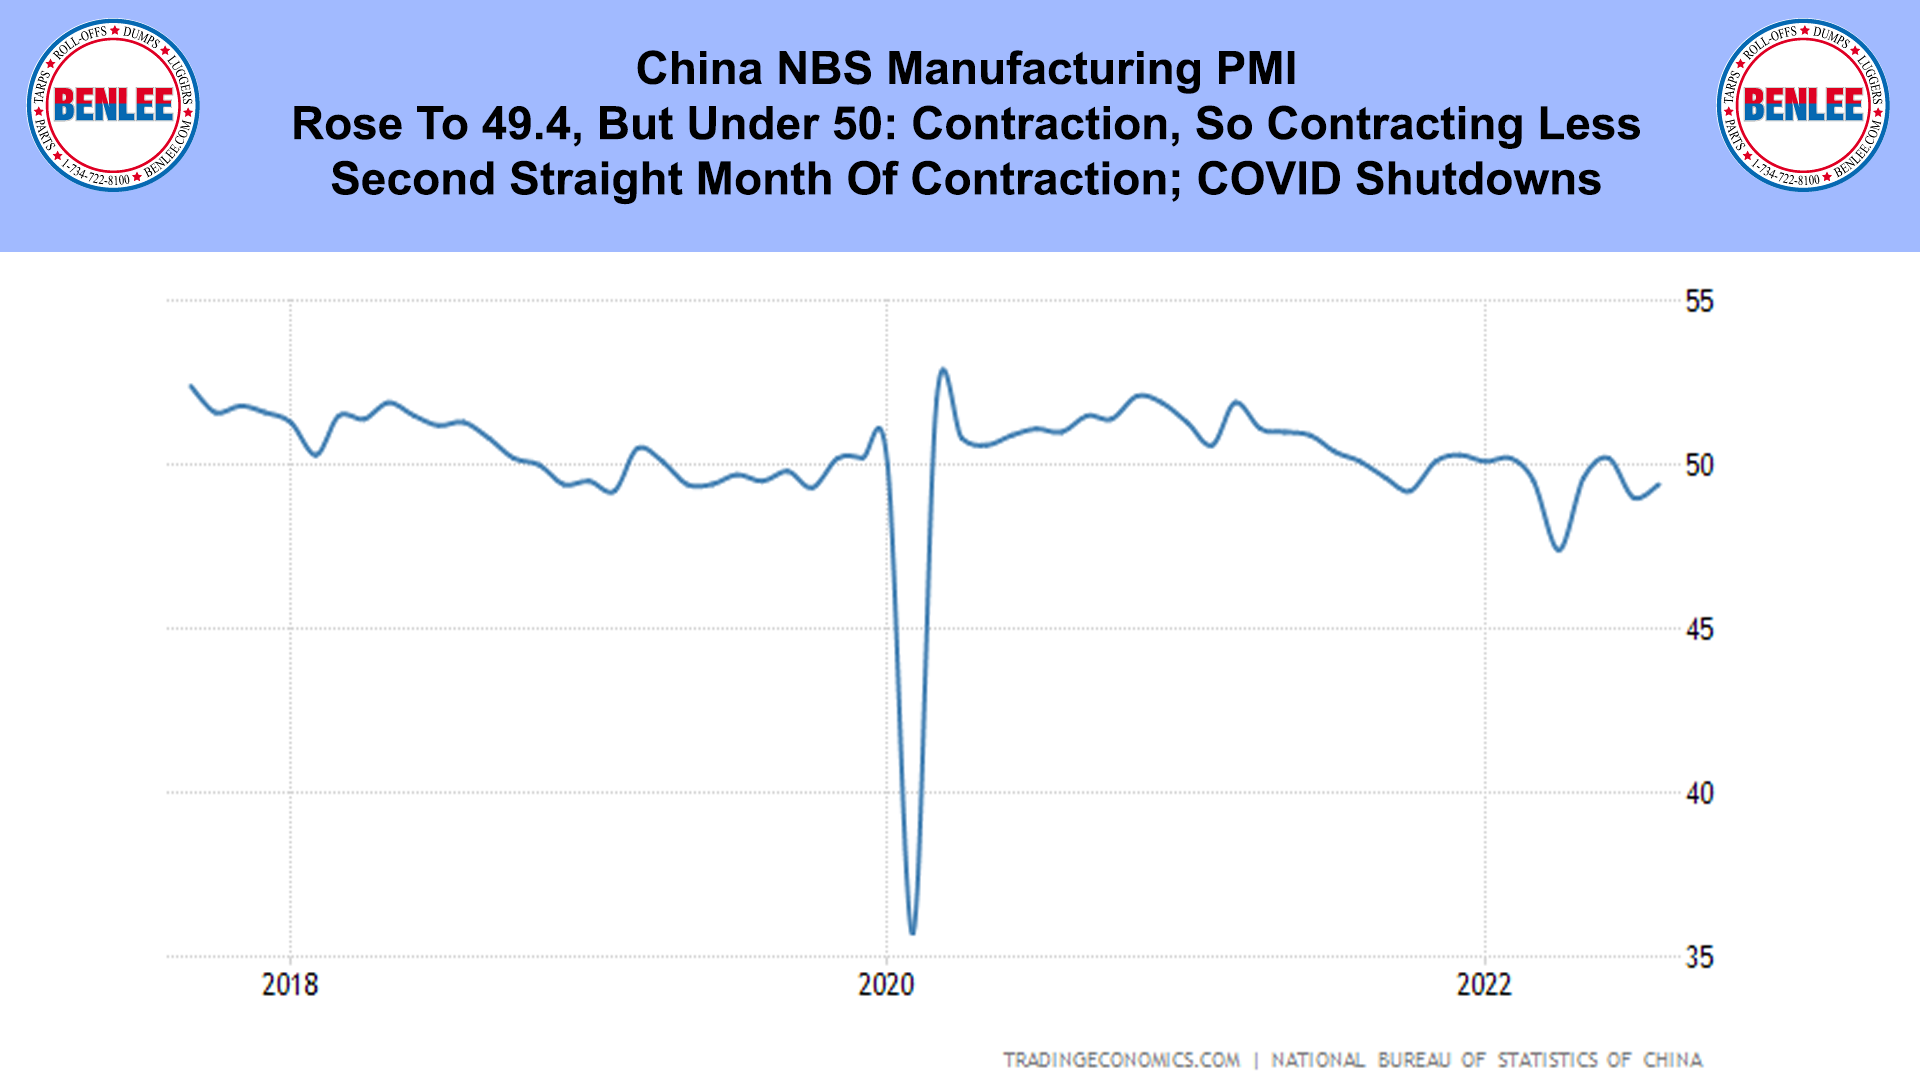 China NBS Manufacturing PMI